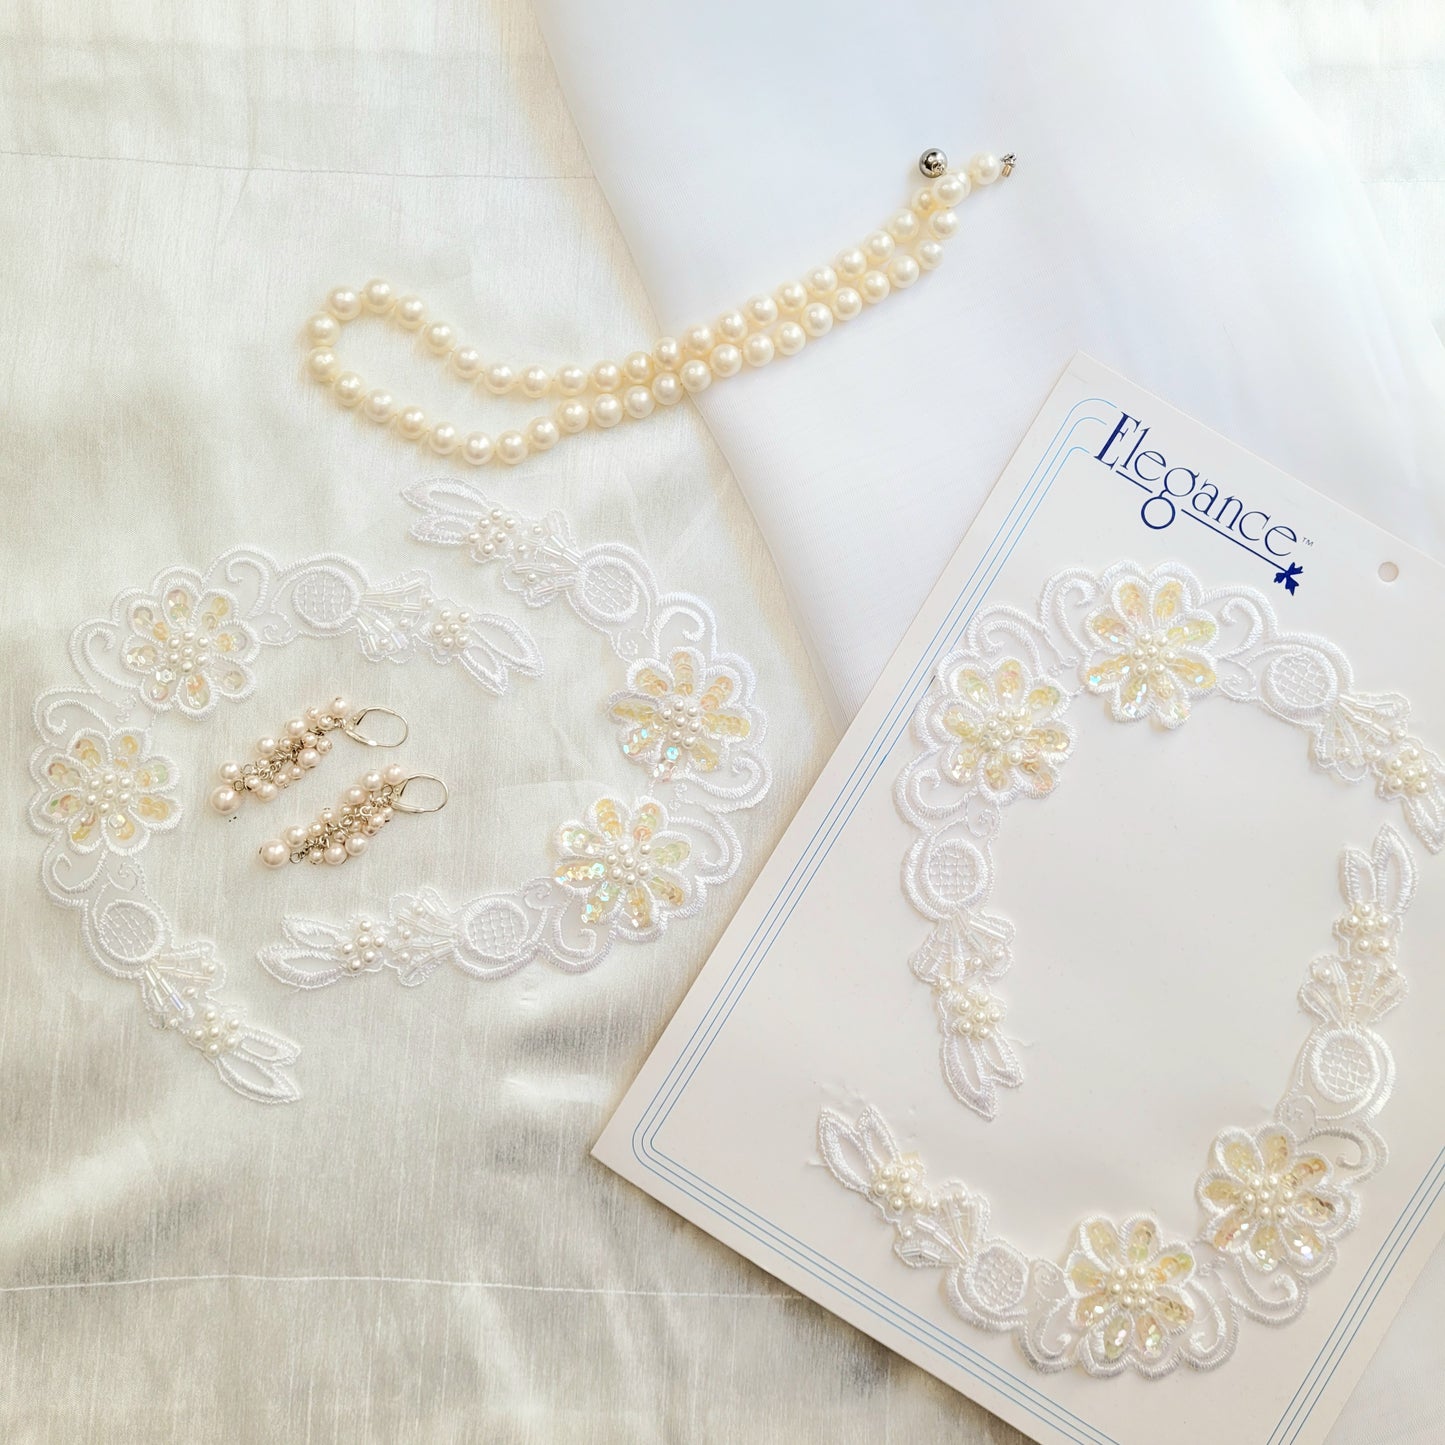 Vintage Bridal Pearl Rose Lace Applique/Patch 2 Pack 4 1/4" x 3"  - White